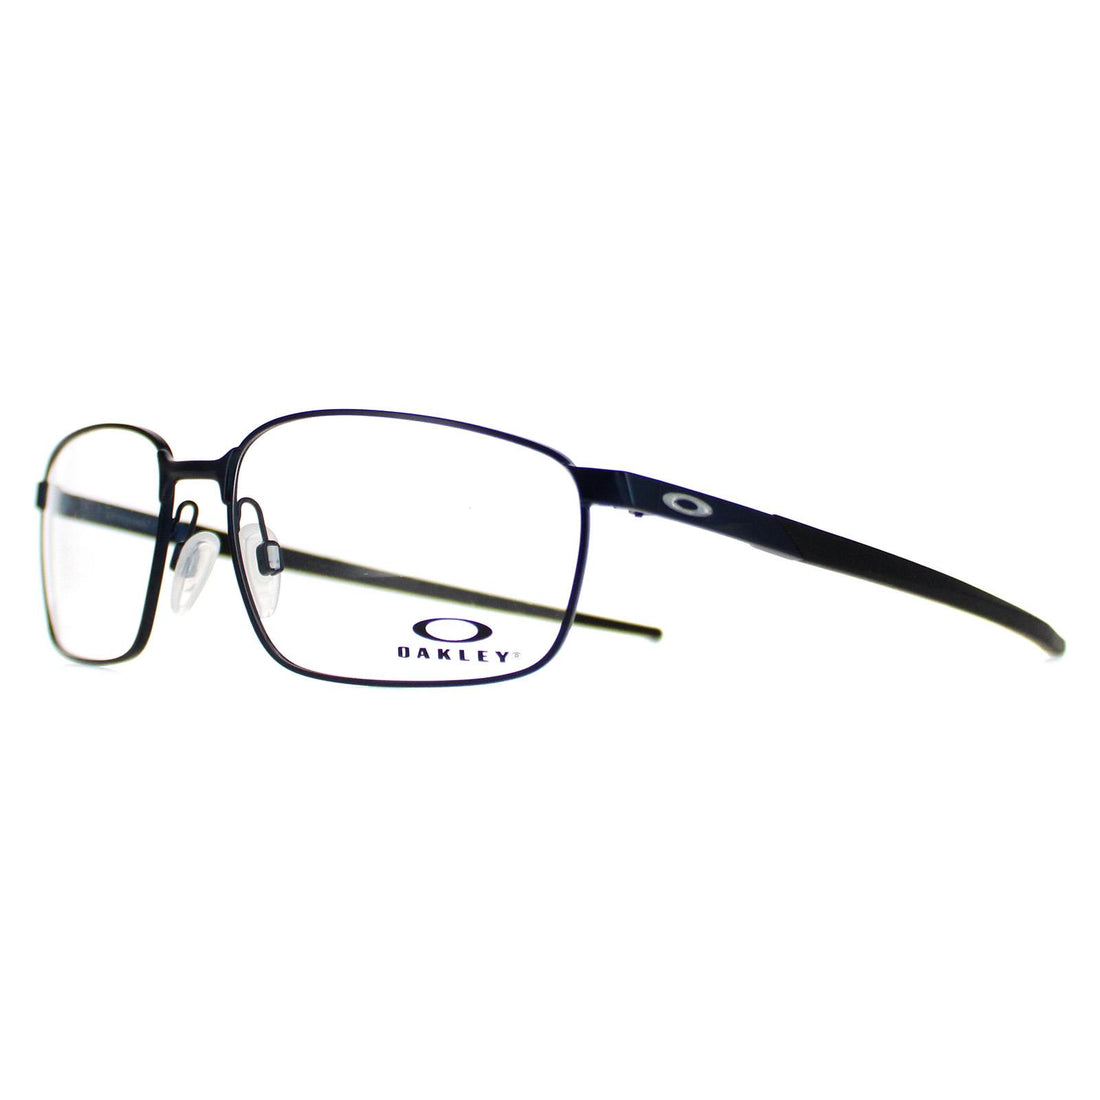 Oakley Glasses Frames Extender OX3249-03 Matte Midnight Men